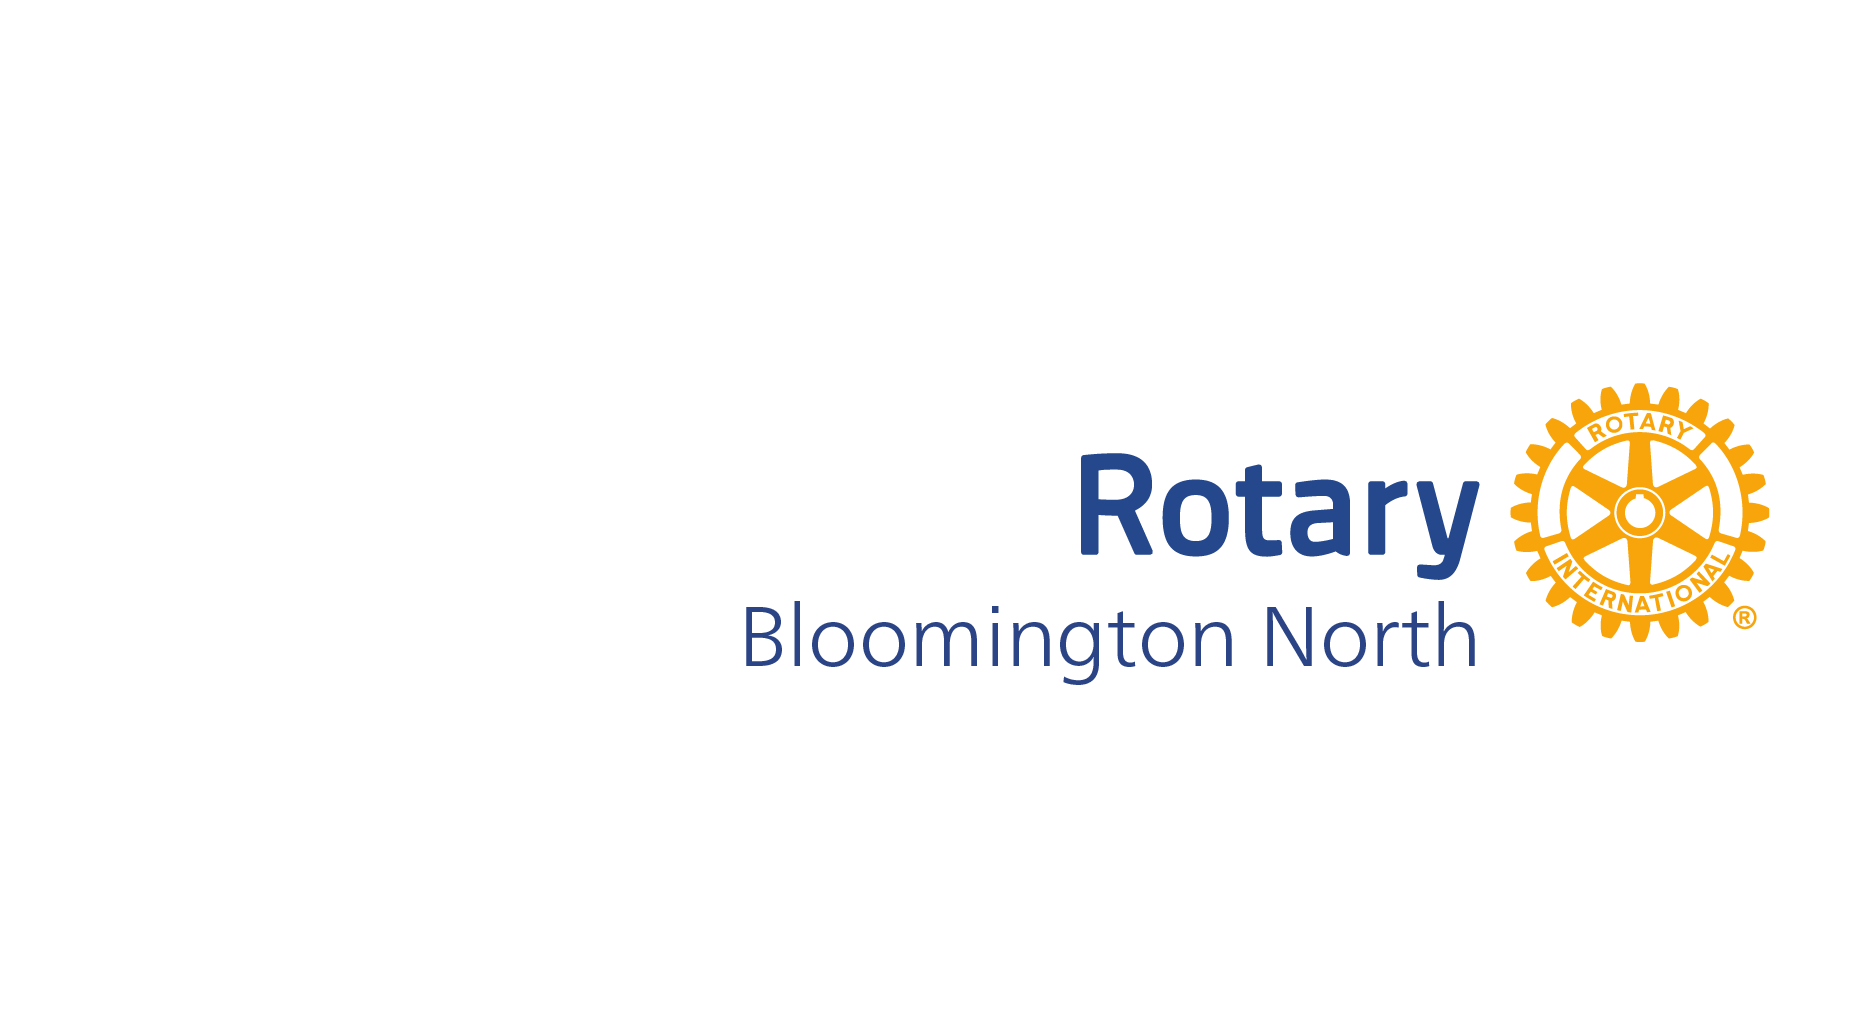 Bloomington North Rotary